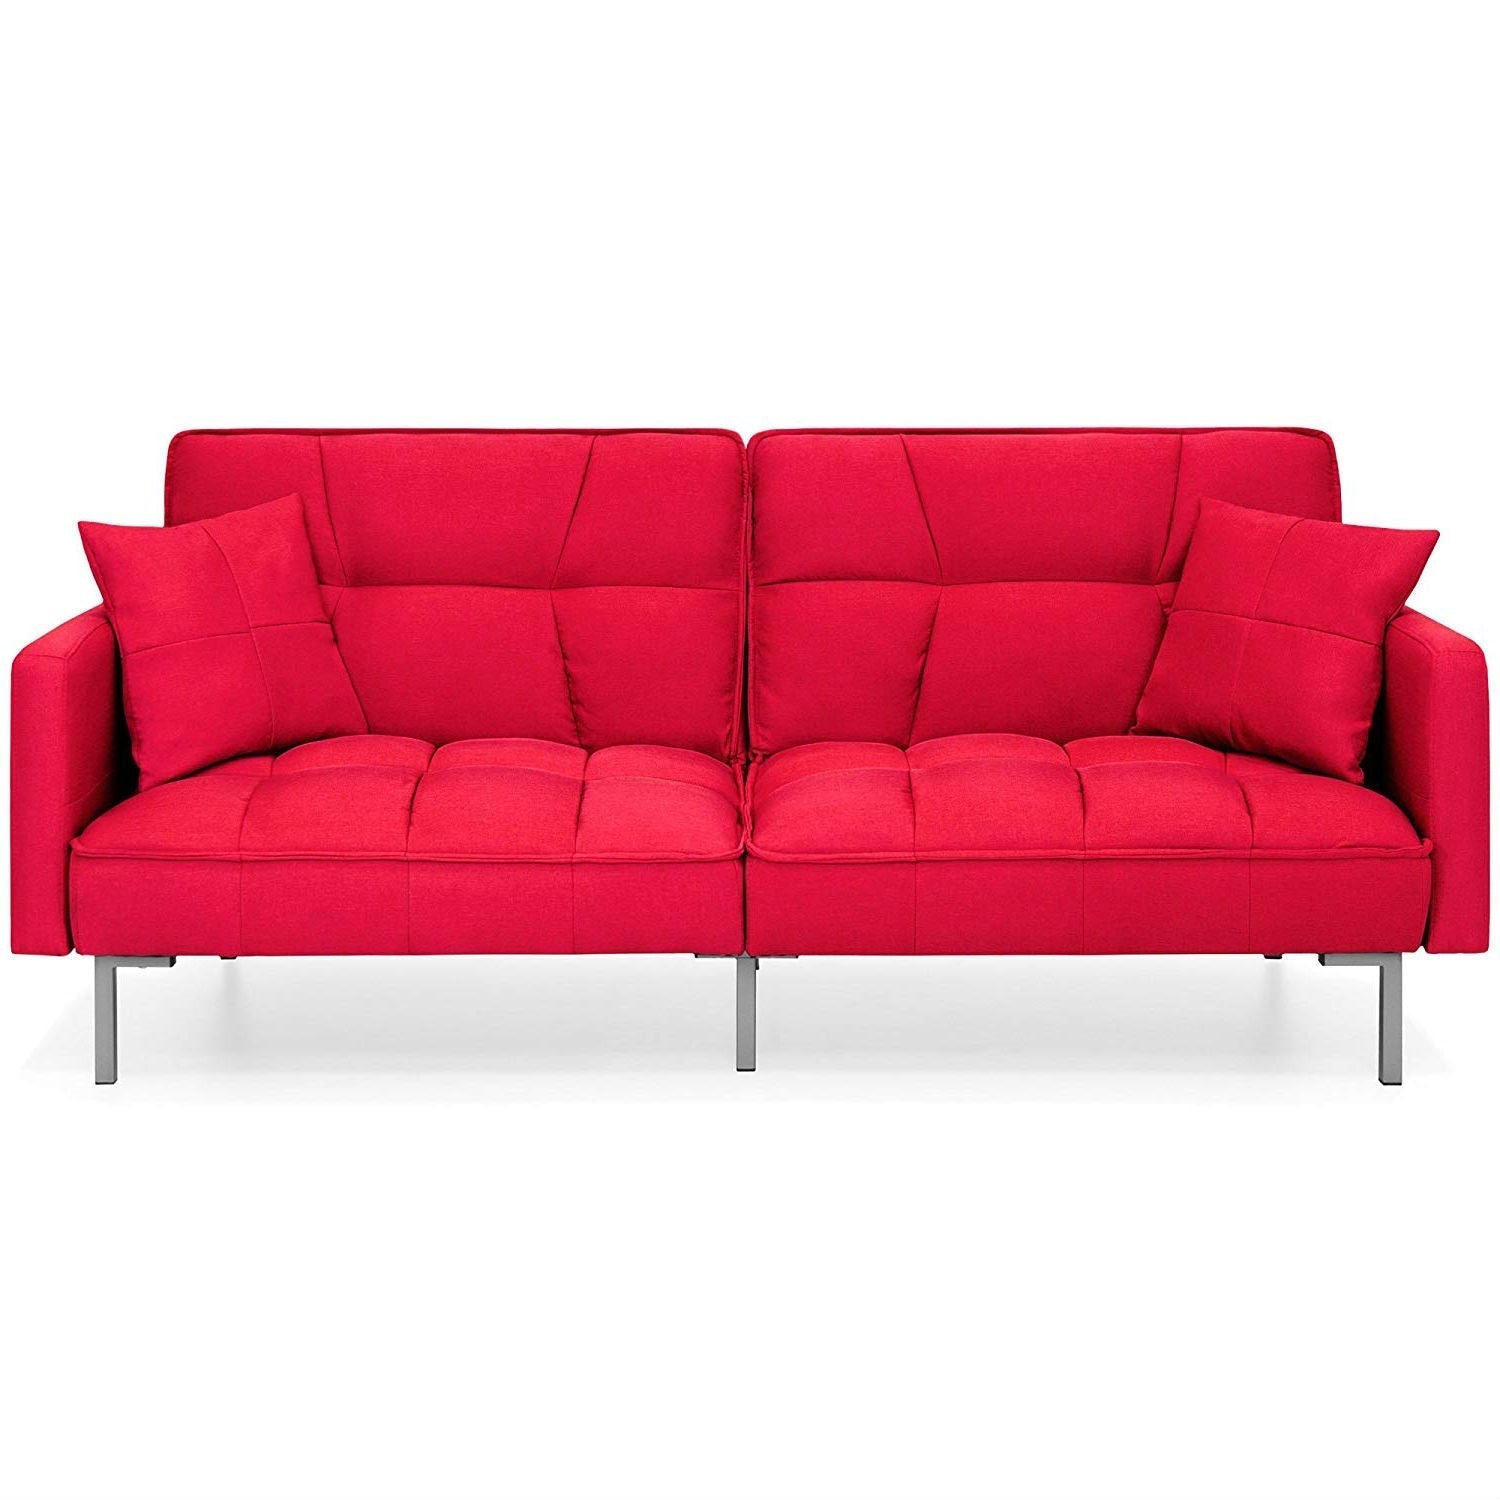 Living Room > Sofas - Plush Red Split-Back Design Convertible Linen Tufted Futon W/ 2 Pillows